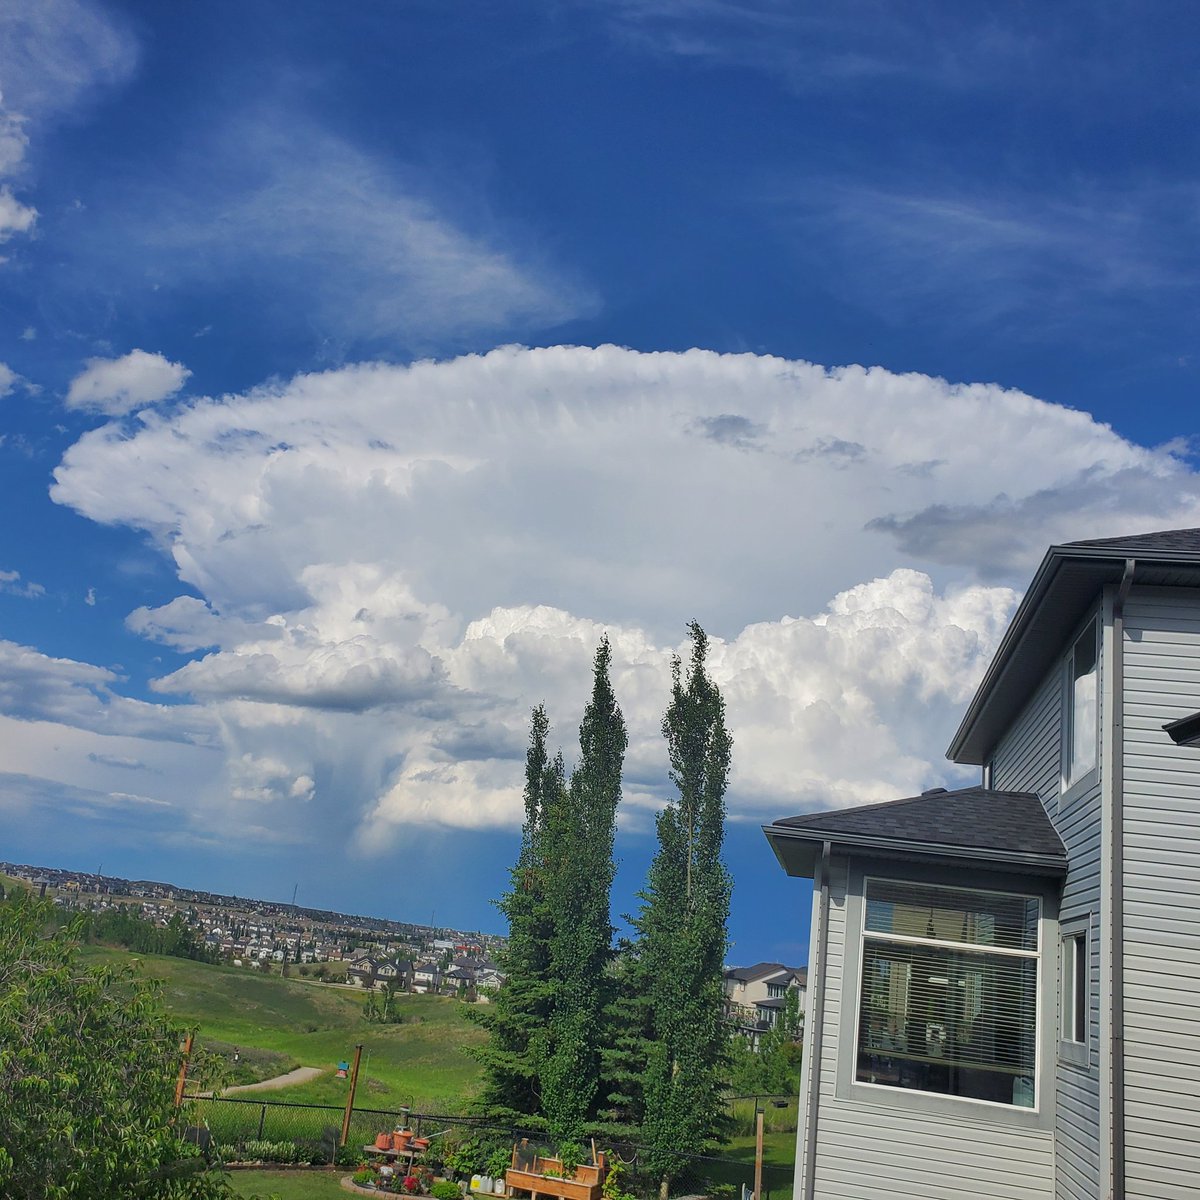 Mushroom cloud in NW Calgary #abweather #abstorm #yyc